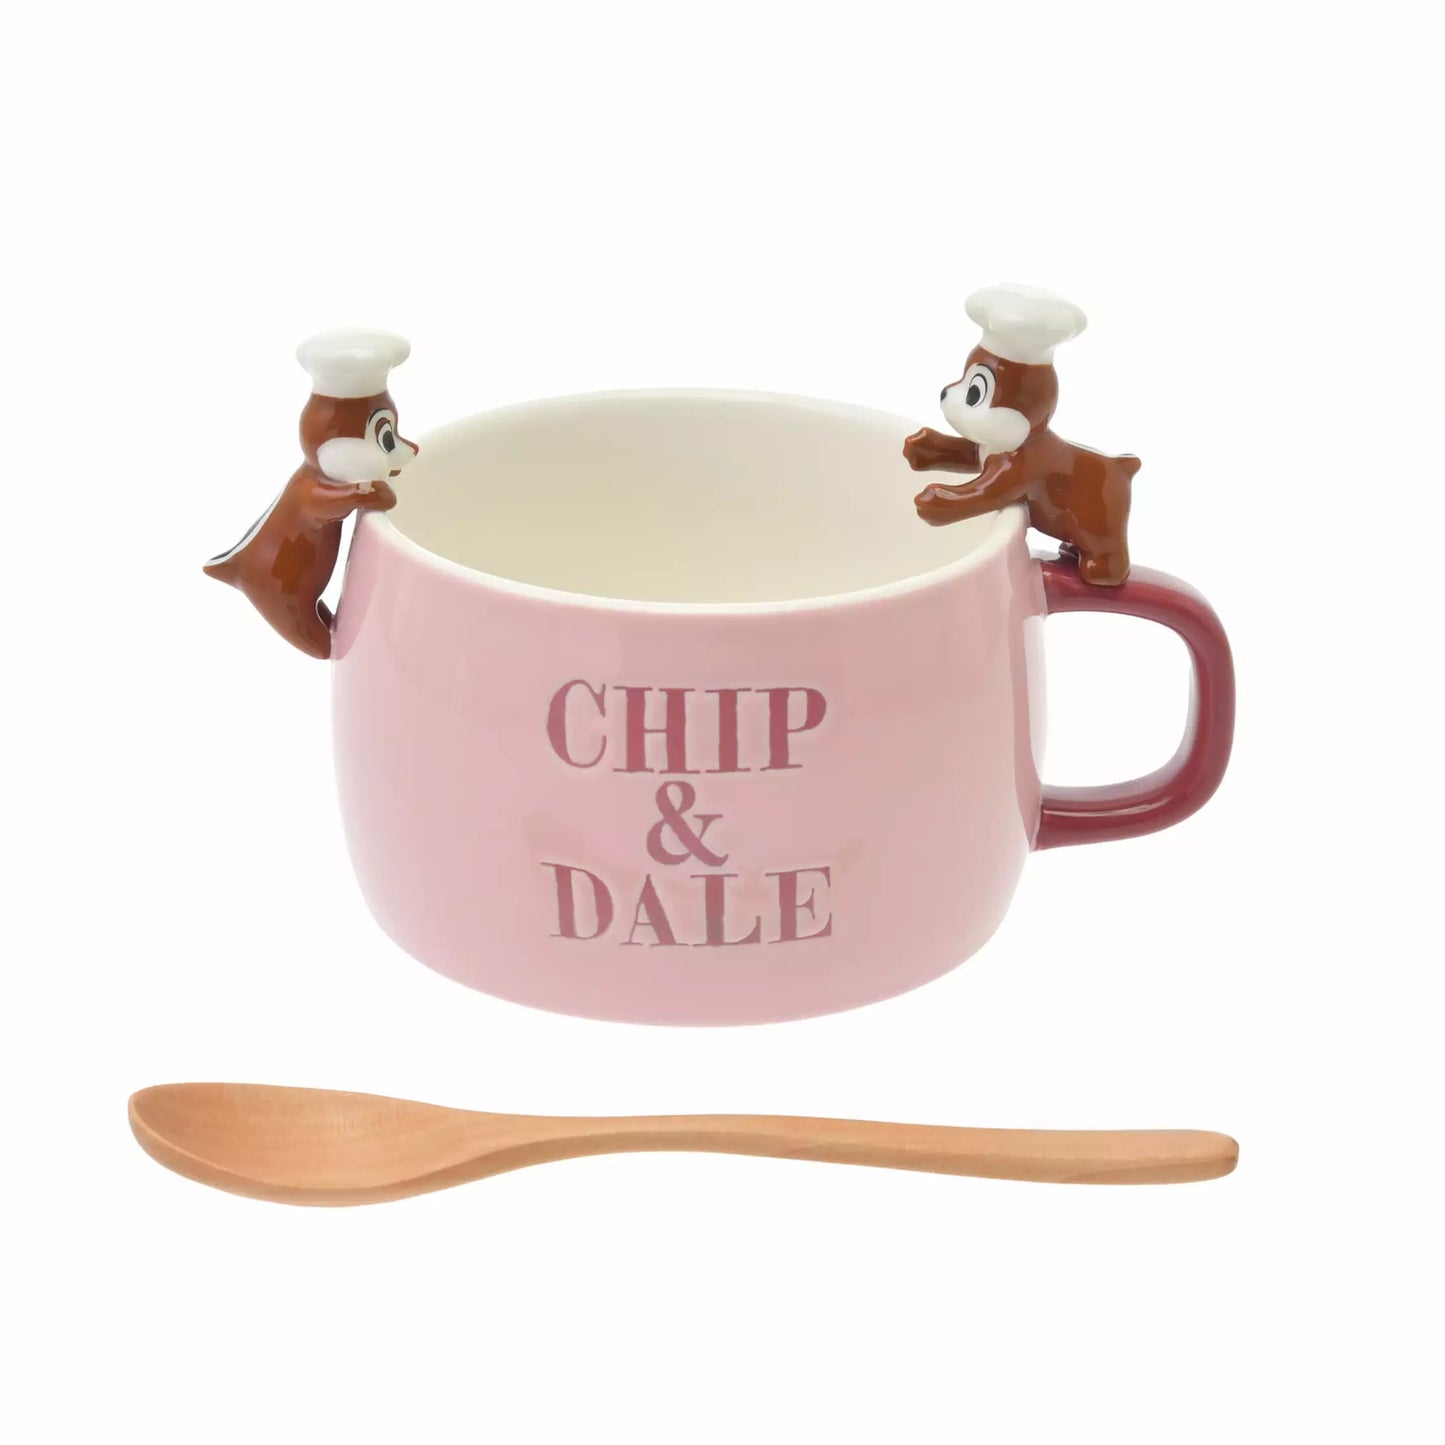 Chip & Dale 湯碗連匙羹套裝 Drinkware